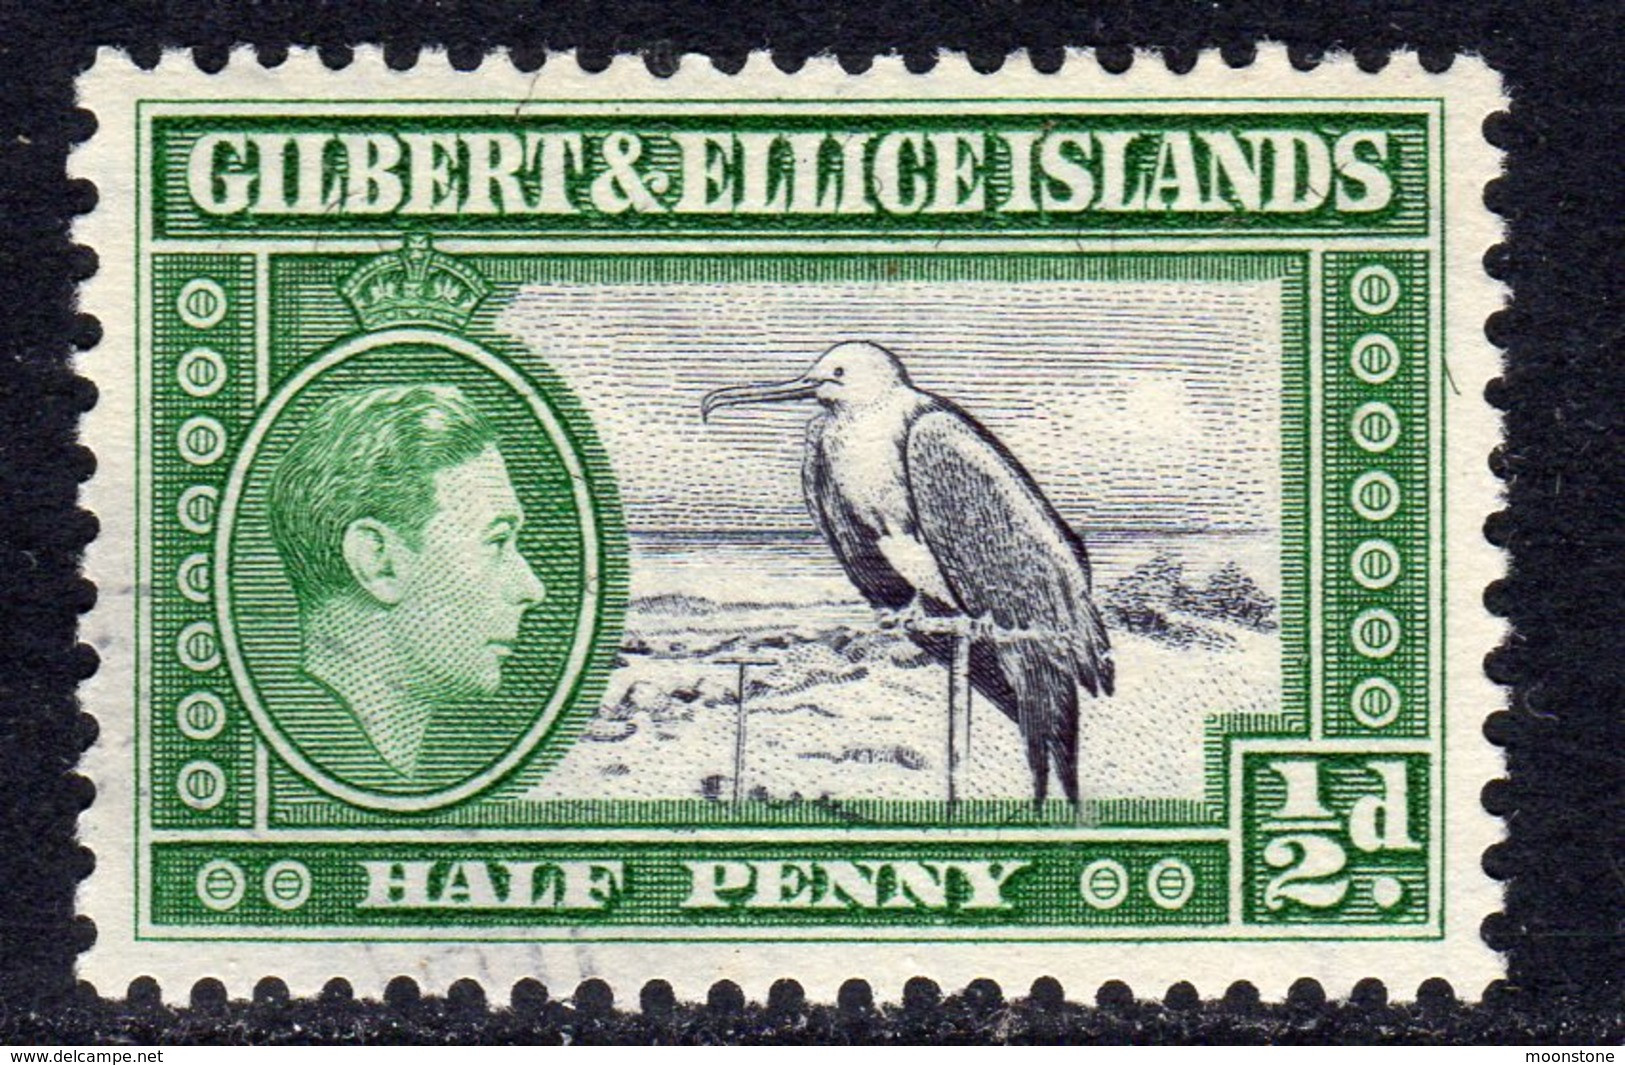 Gilbert & Ellice Islands GVI 1939 ½d Frigate Bird Definitive, Used, SG 43 (BP2) - Gilbert- Und Ellice-Inseln (...-1979)